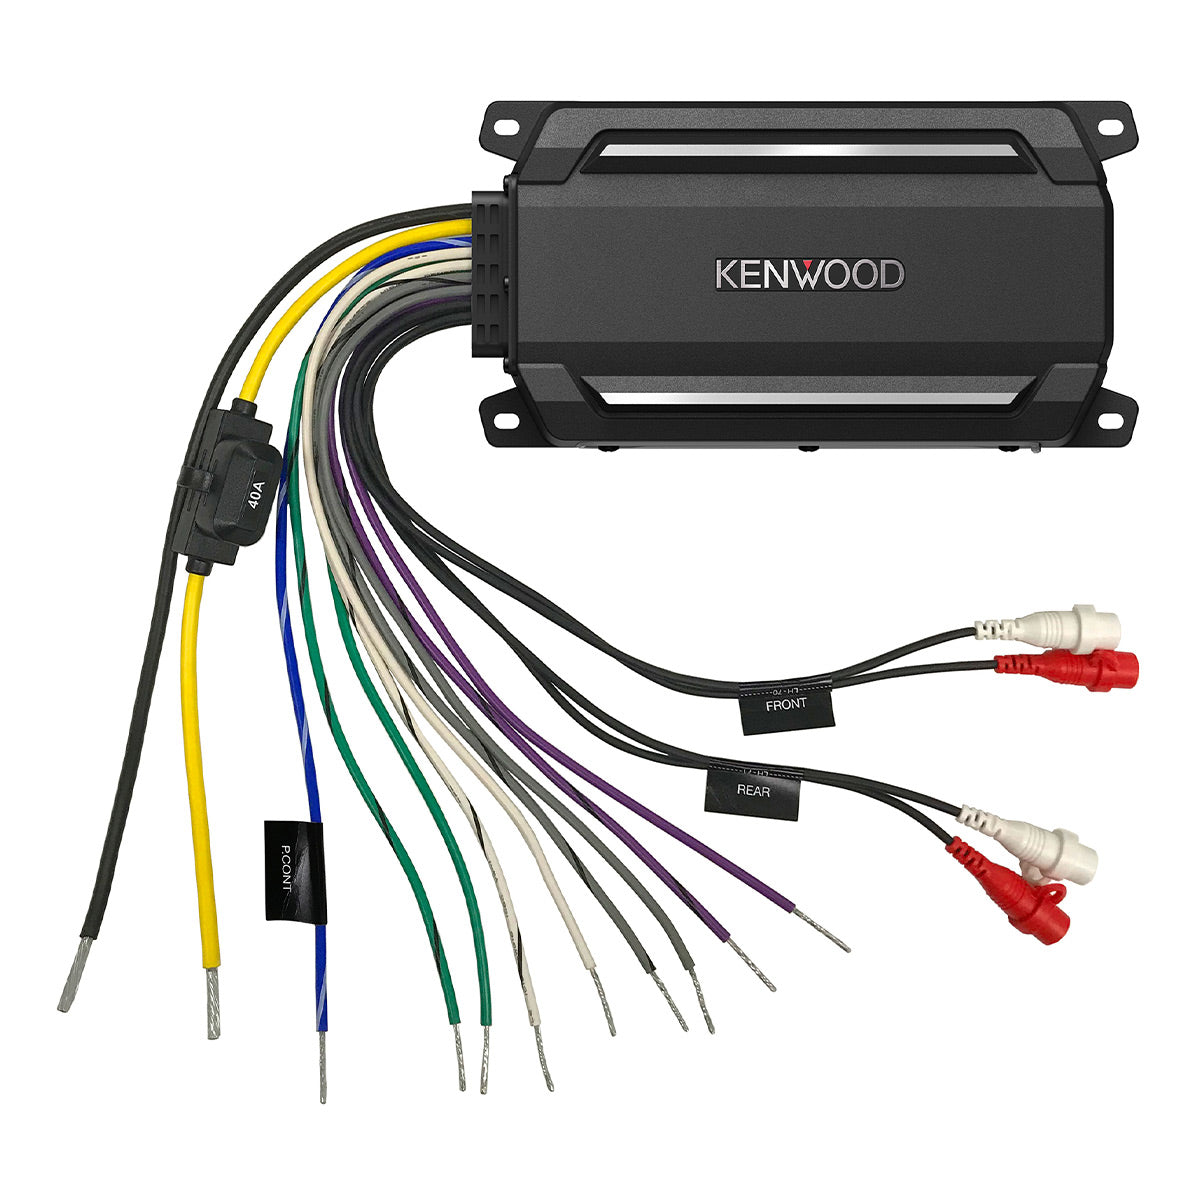 Kenwood KAC-M5014 Compact 4-Channel Digital Marine & Motorsport Amplifier